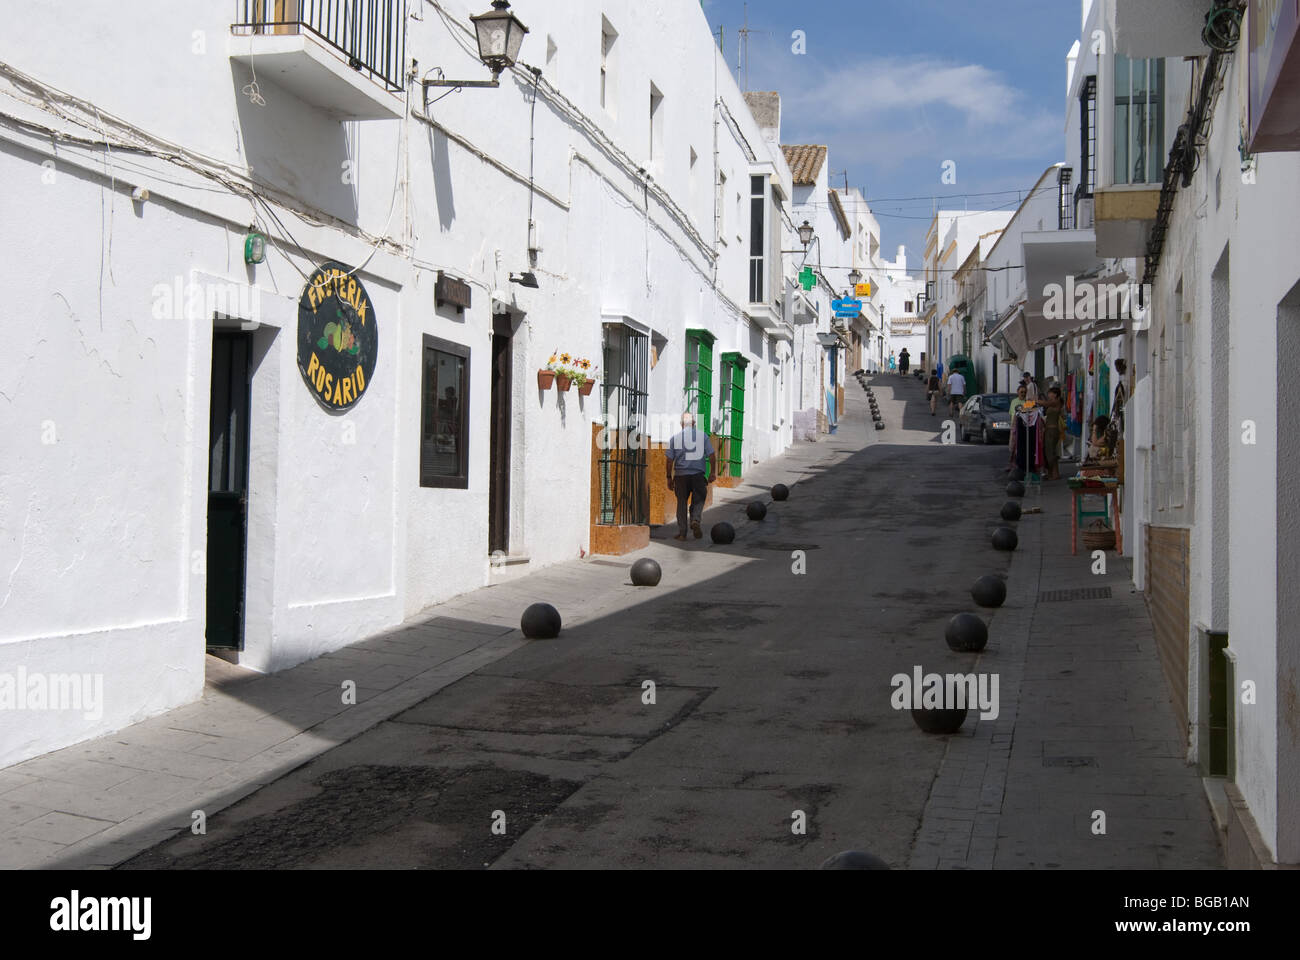 A street in the old town, Conil de la Frontera, Spain Stock Photo